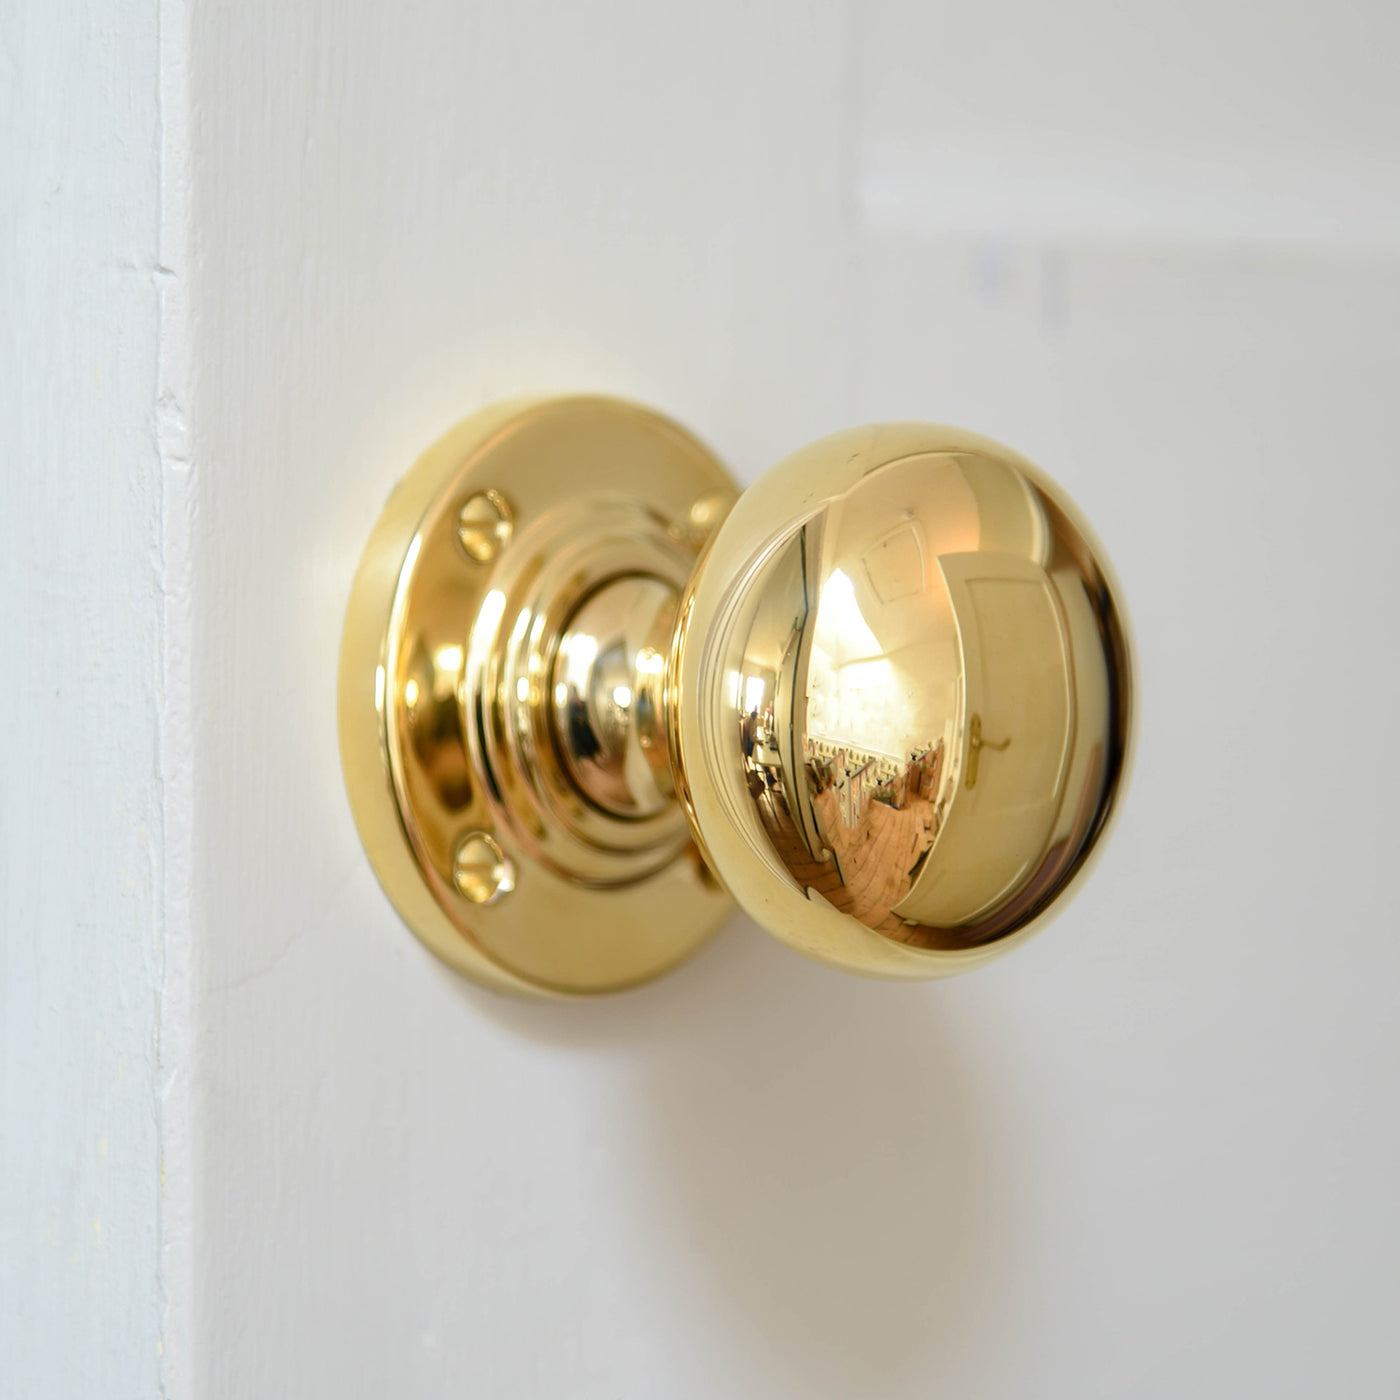 Large Bun Door Knobs in polished brass.